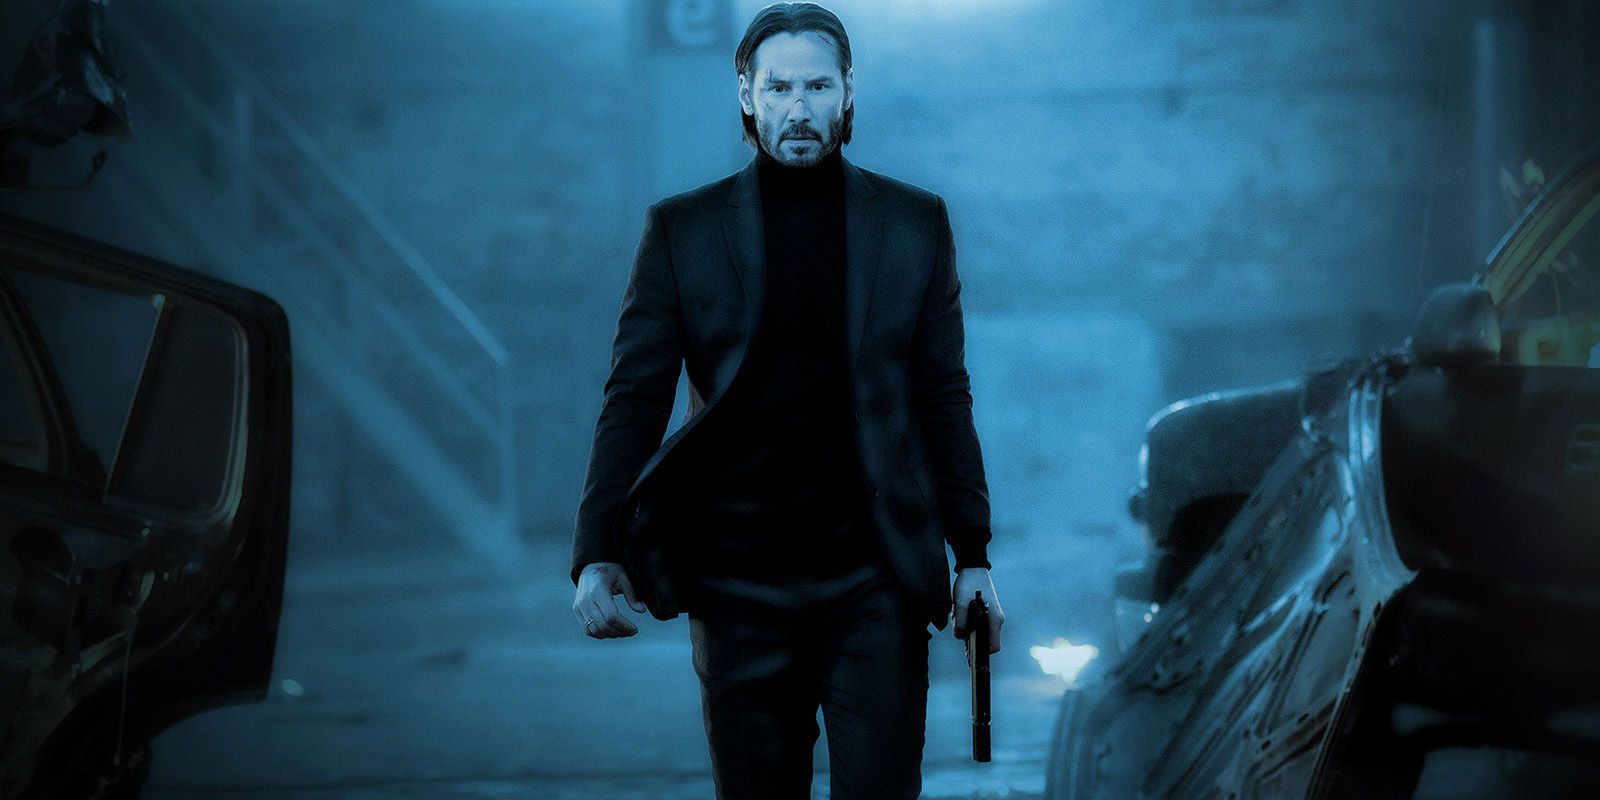 Keanu Reeves as John Wick holding a gun in an alley